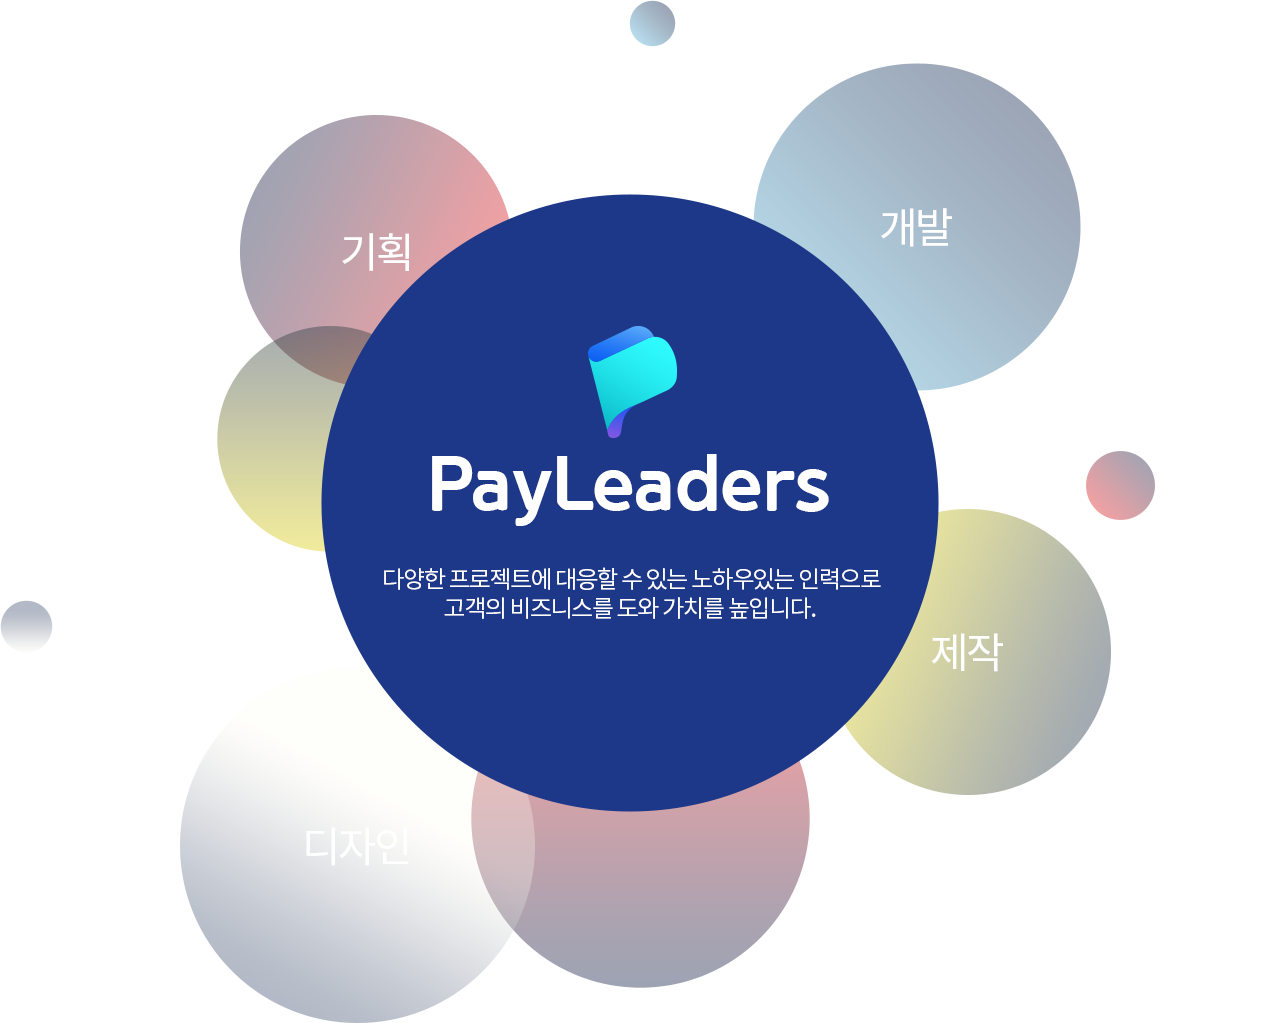 payleaders | 다양한 프로젝트에 대응할 수 있는 노하우있는 인력으로 고객의 비즈니스를 도와 가치를 높입니다. | 기획, 개발, 디자인, 제작